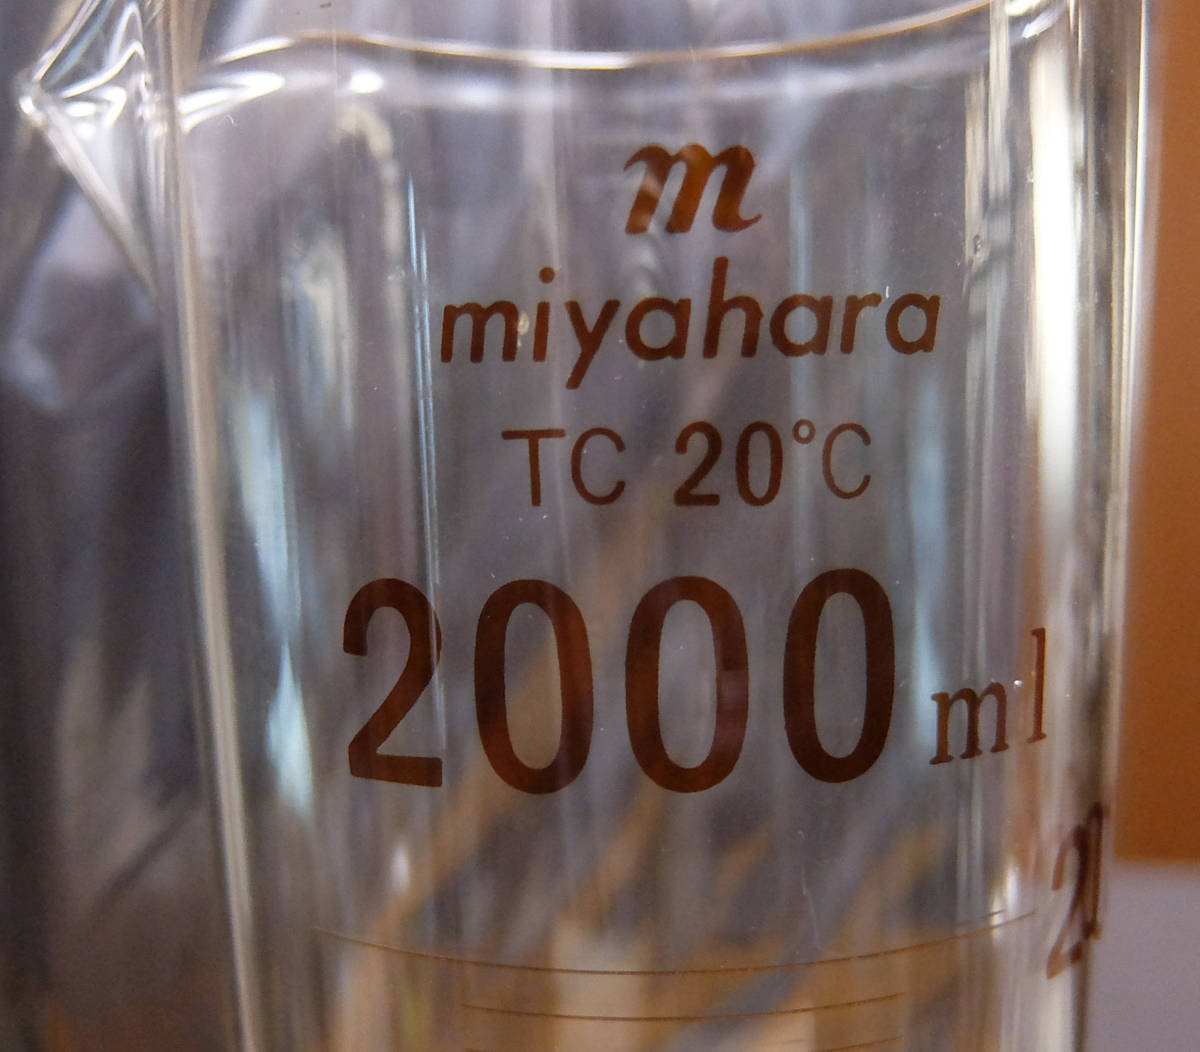 miyahara 宮原計量器製作所 2000ml メスシリンダーガラス製 2L_画像2